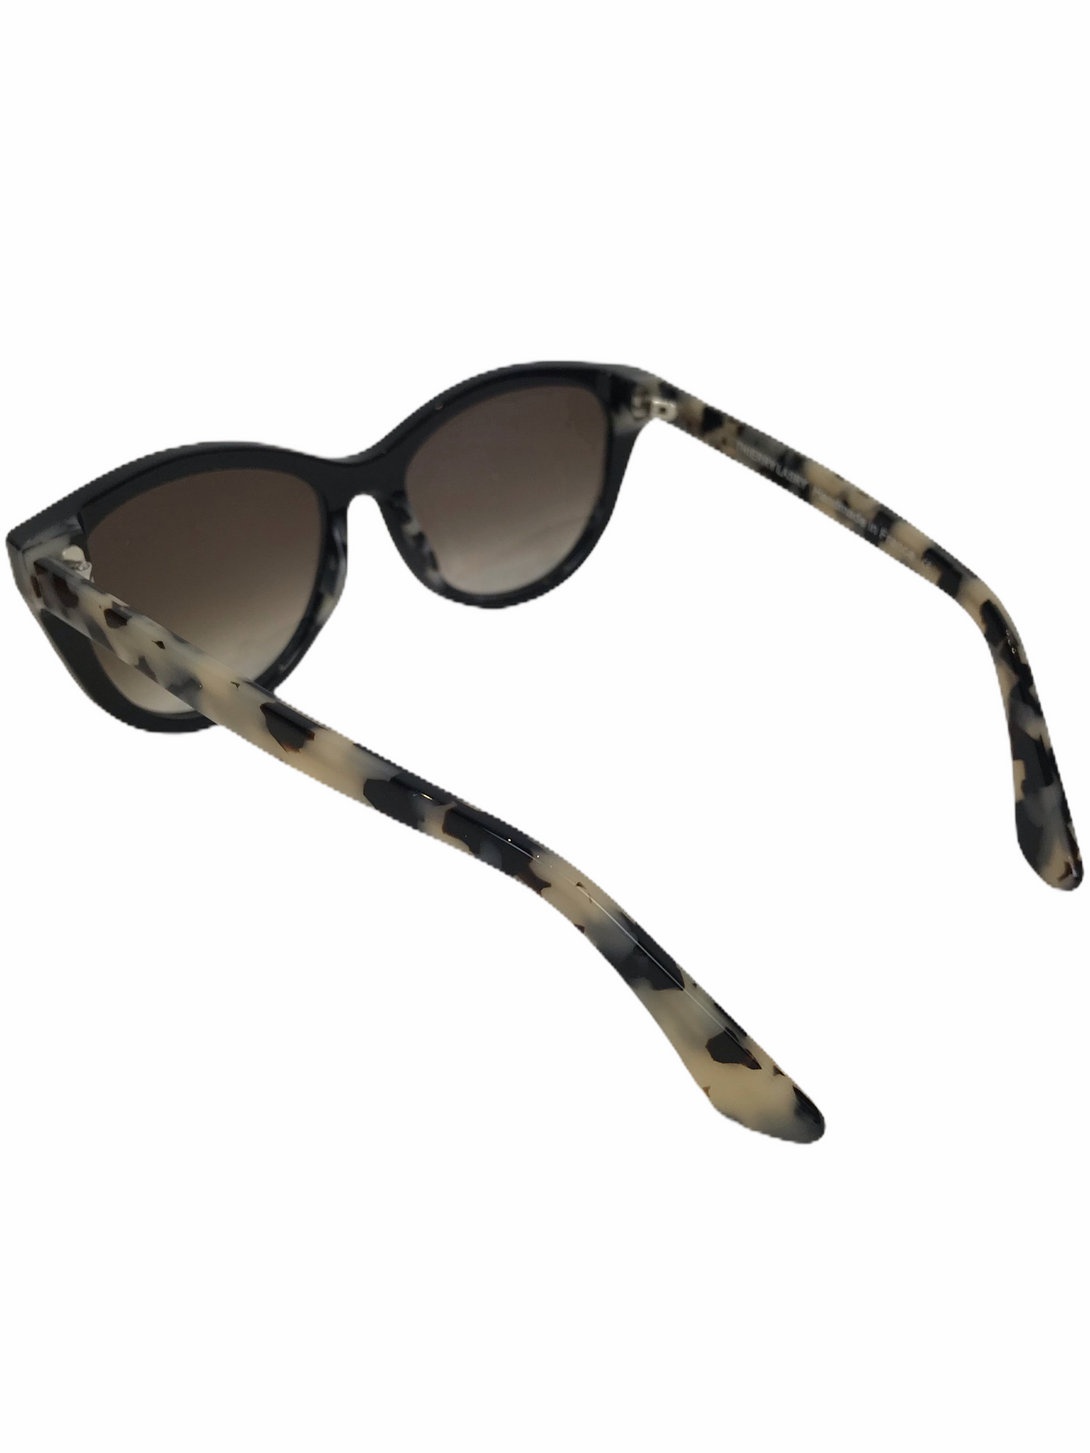 Thierry Lasry Sunglasses - Siopaella Designer Exchange